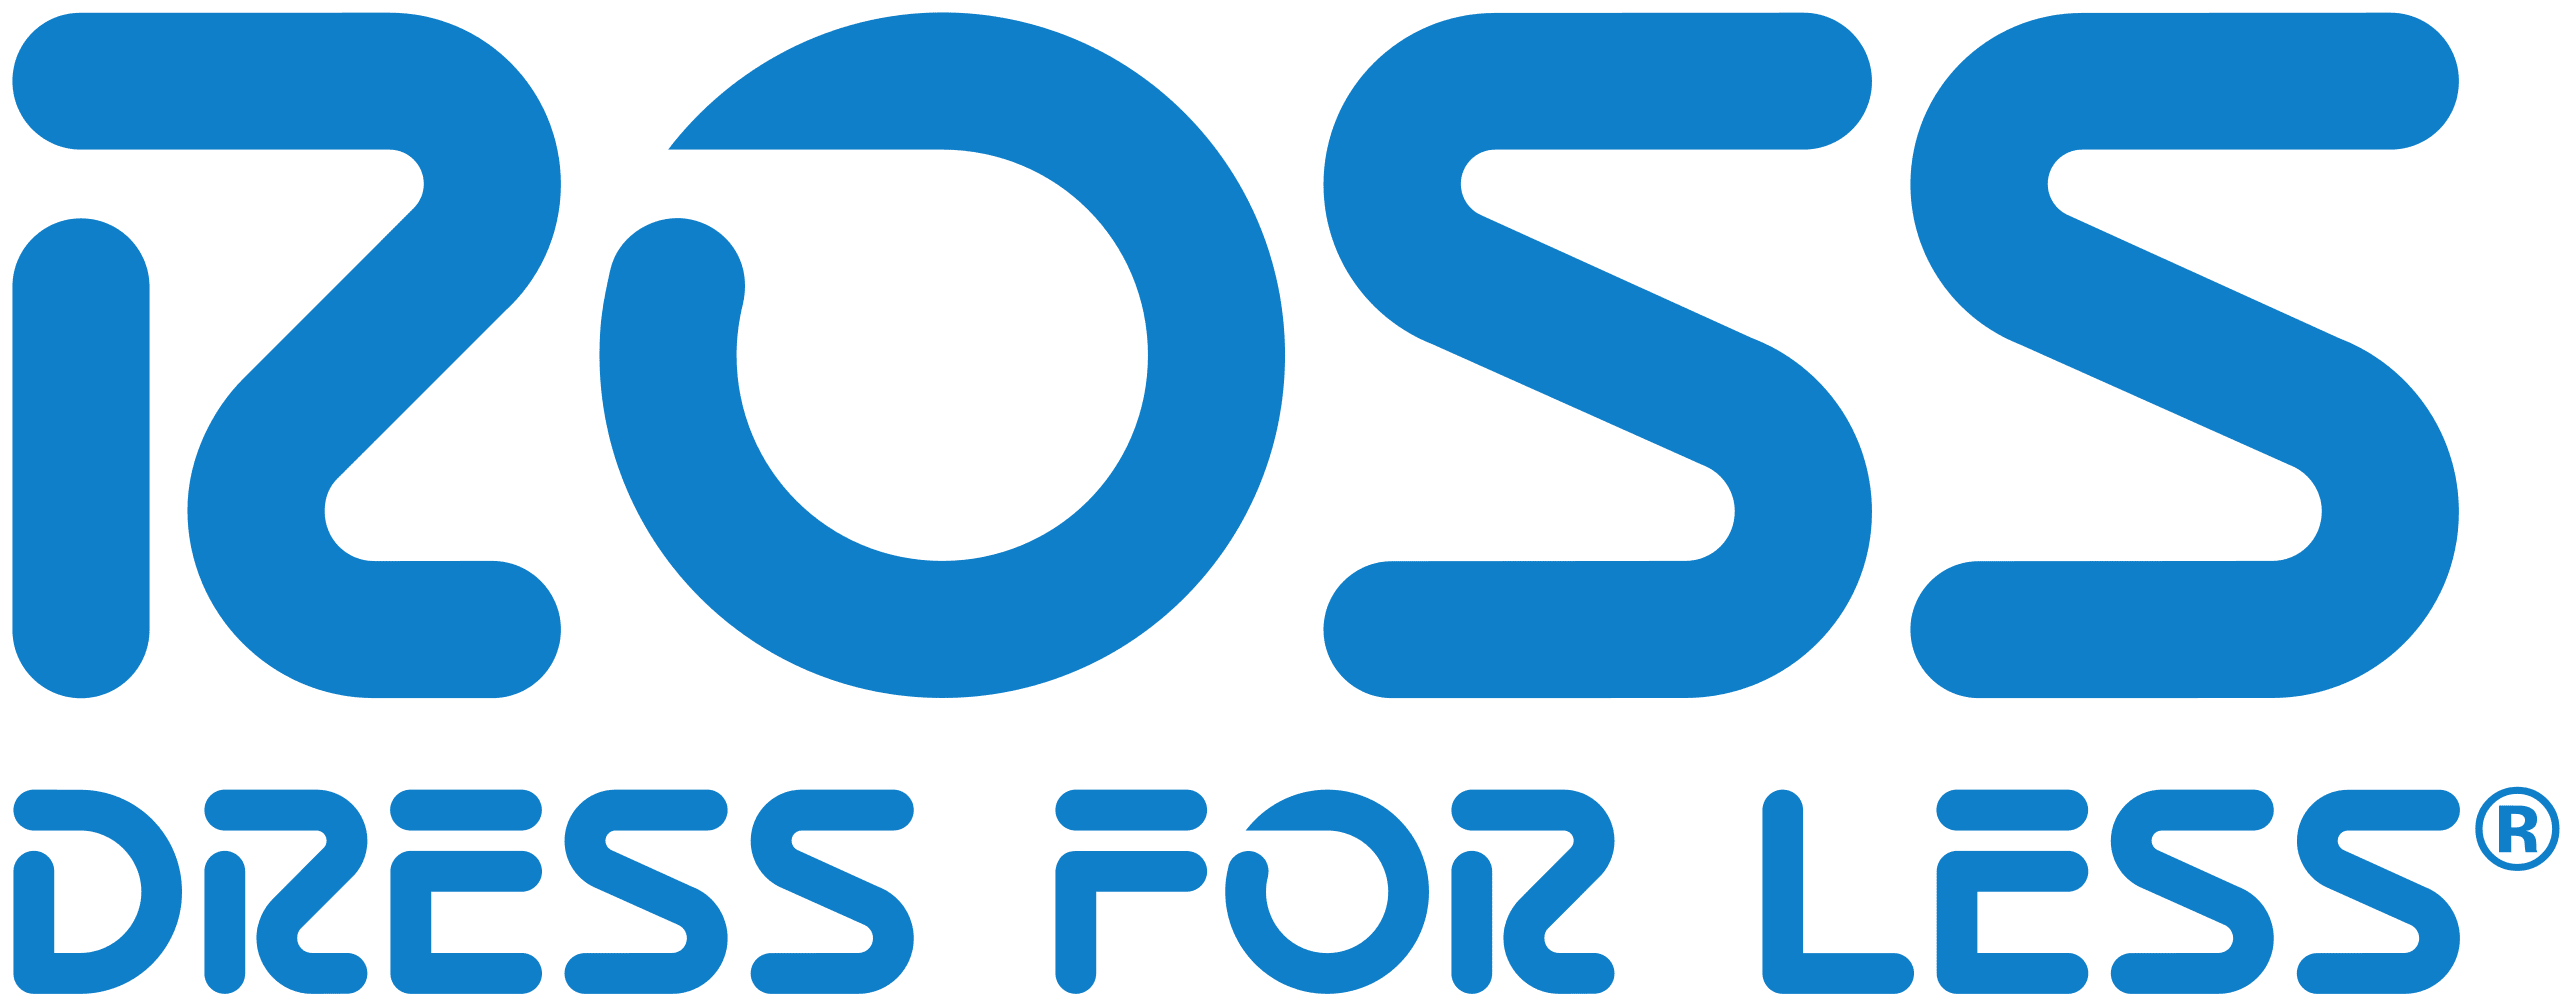 ross_stores_logo.svg